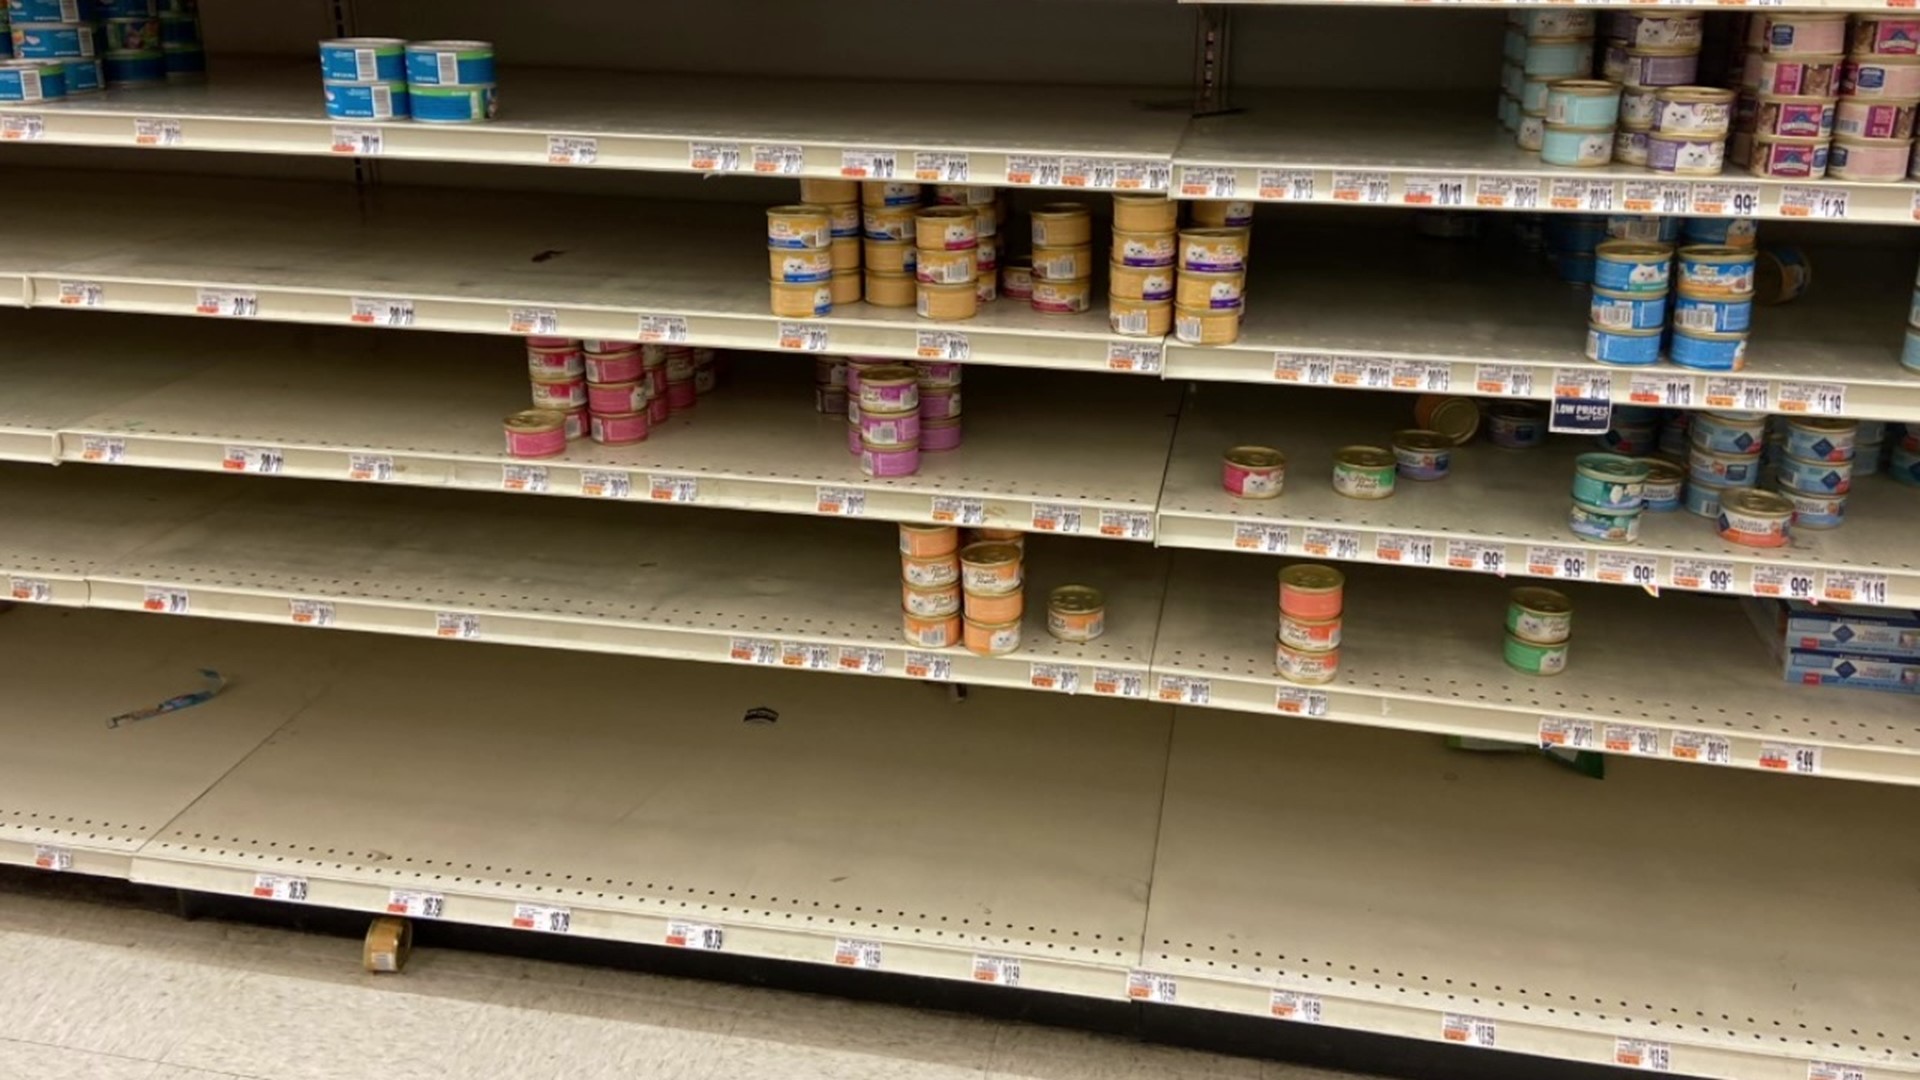 Latest shortage on store shelves? Pet food